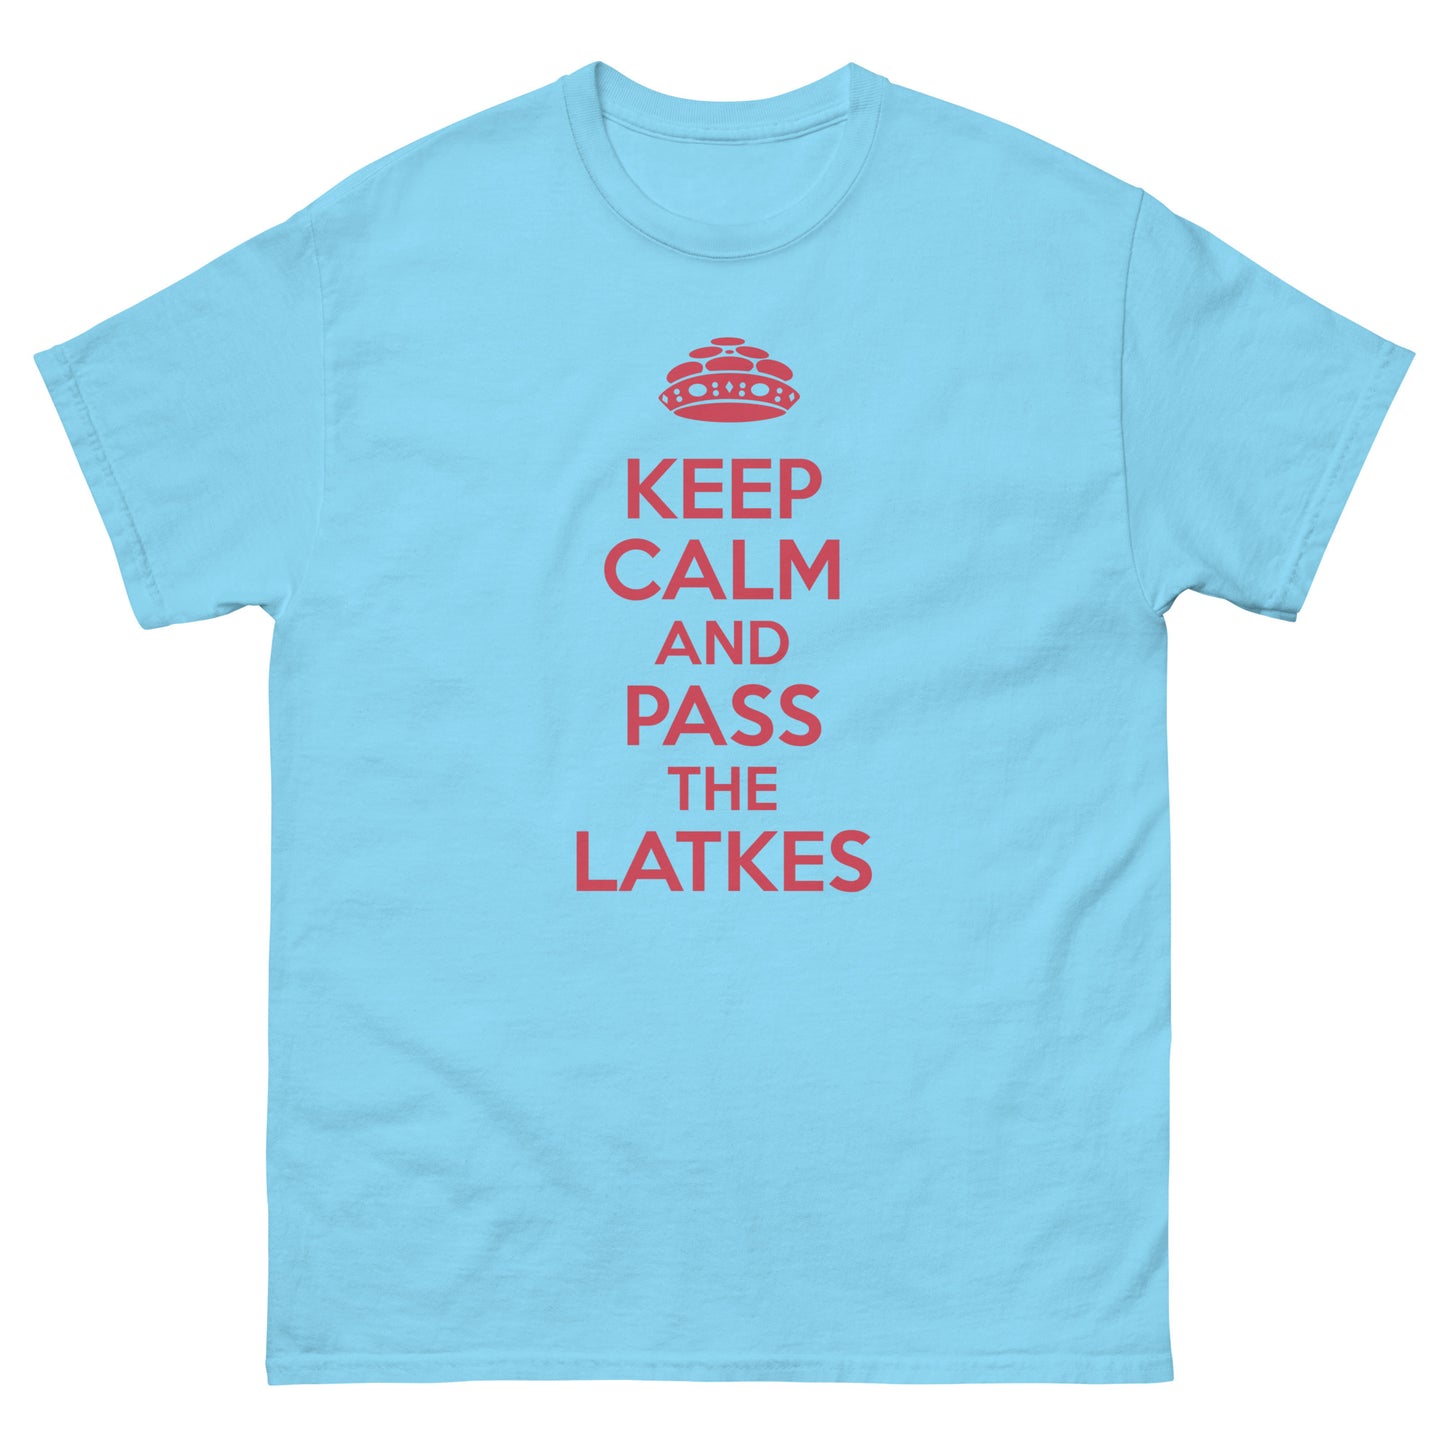 Men's Chanukah "Pass The Latkes" tee